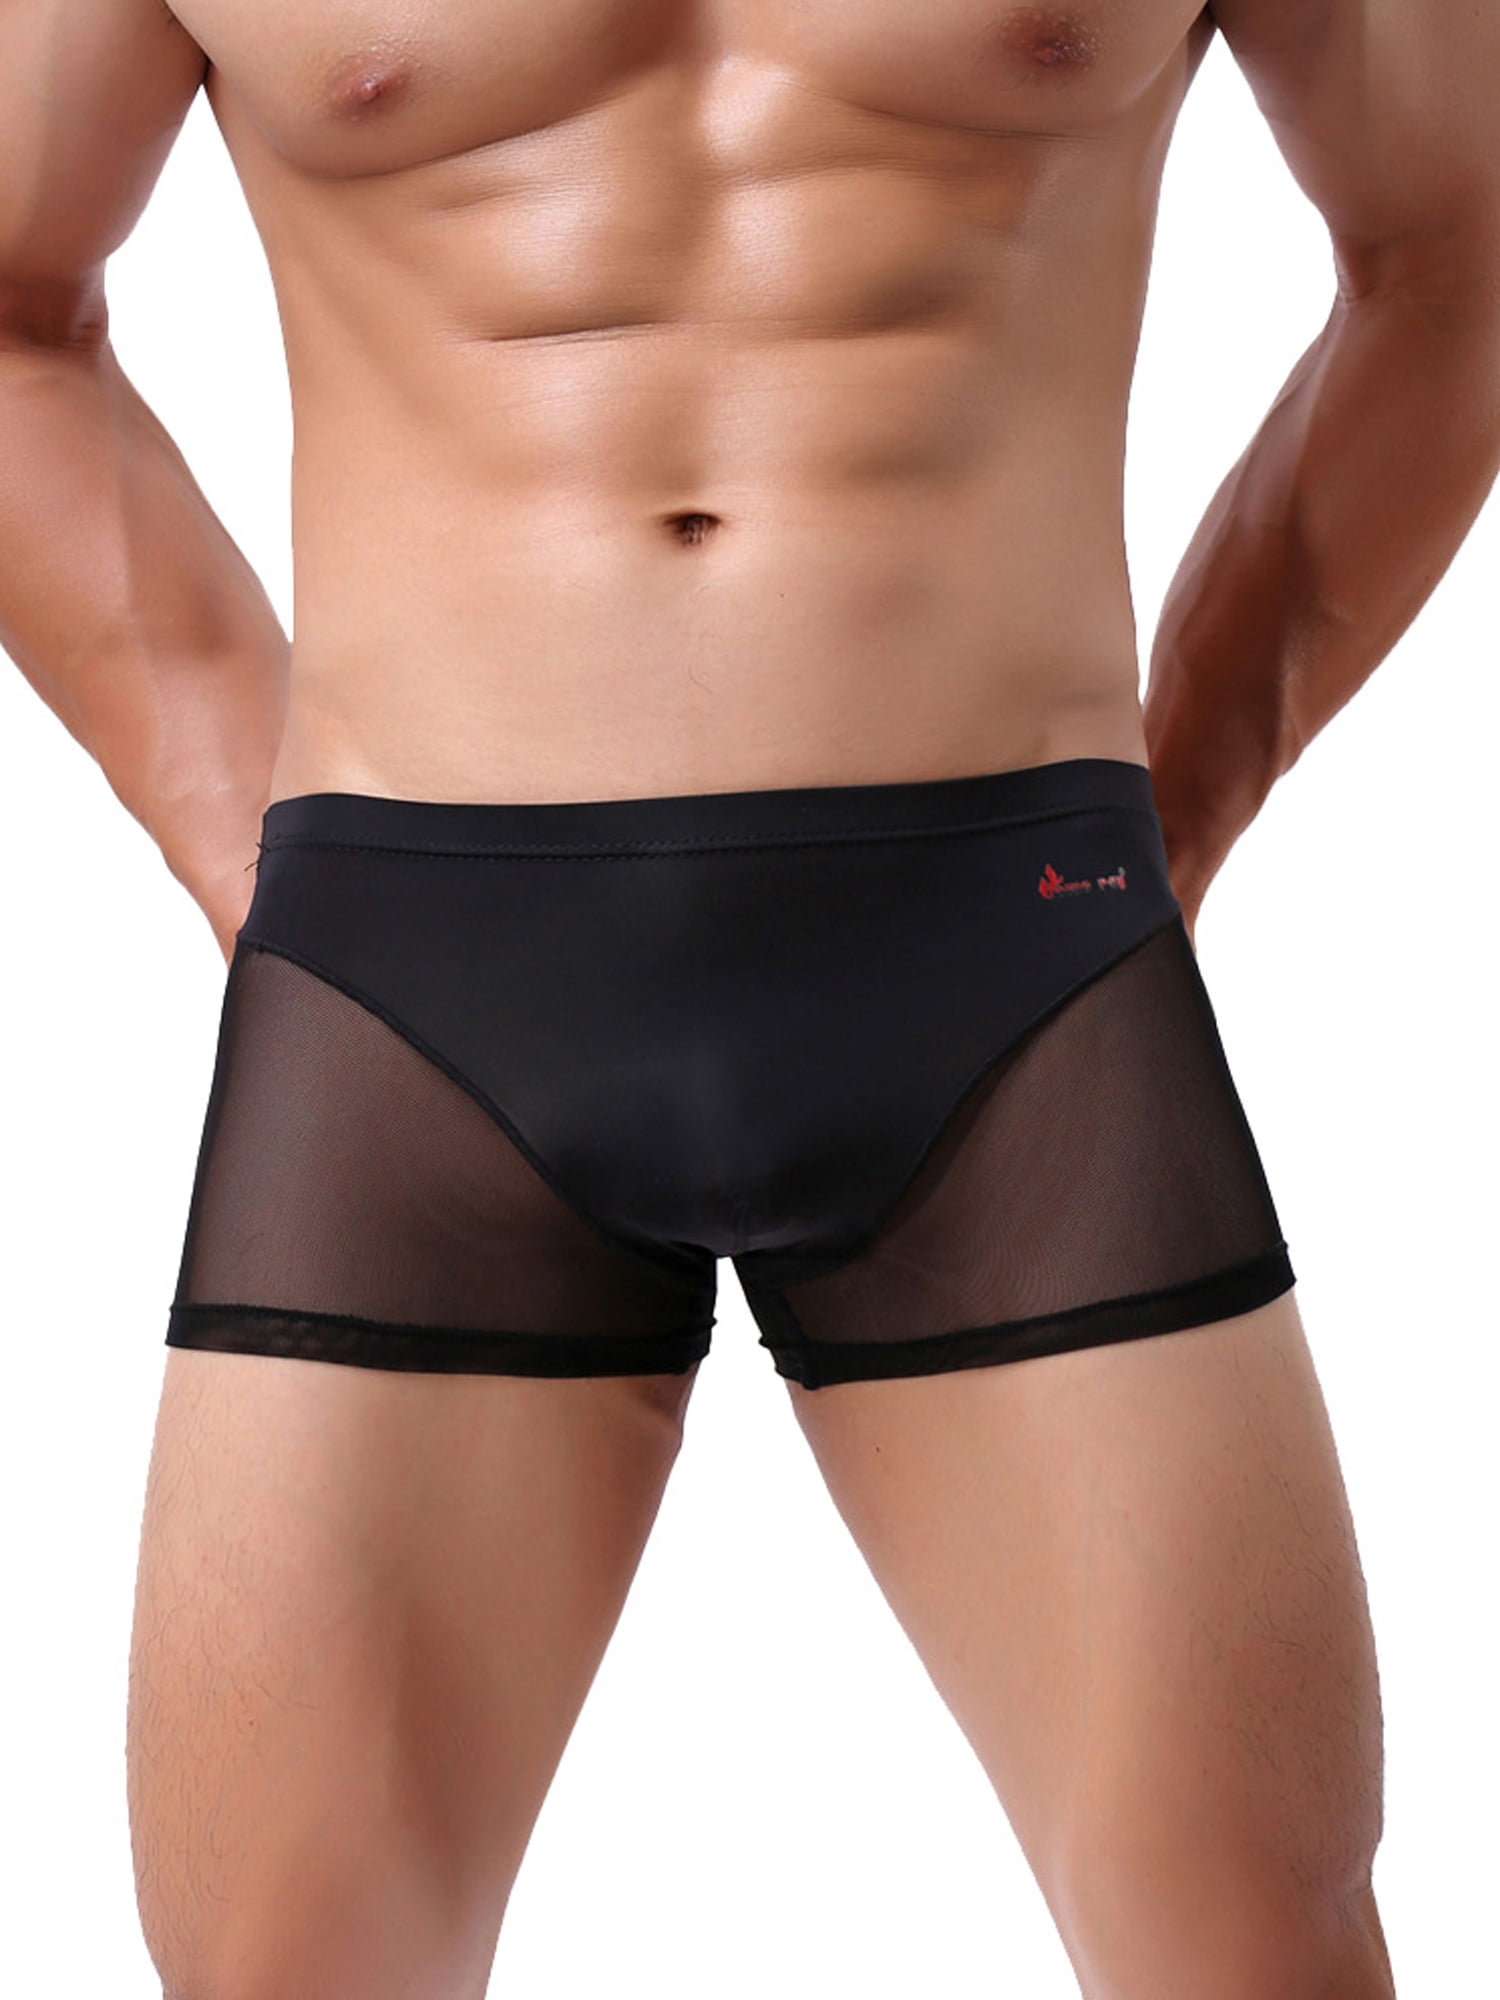 Boxer Men's Underwear Ice Silk Boxer Briefs Printed Seamless Panties Flex Waistband 